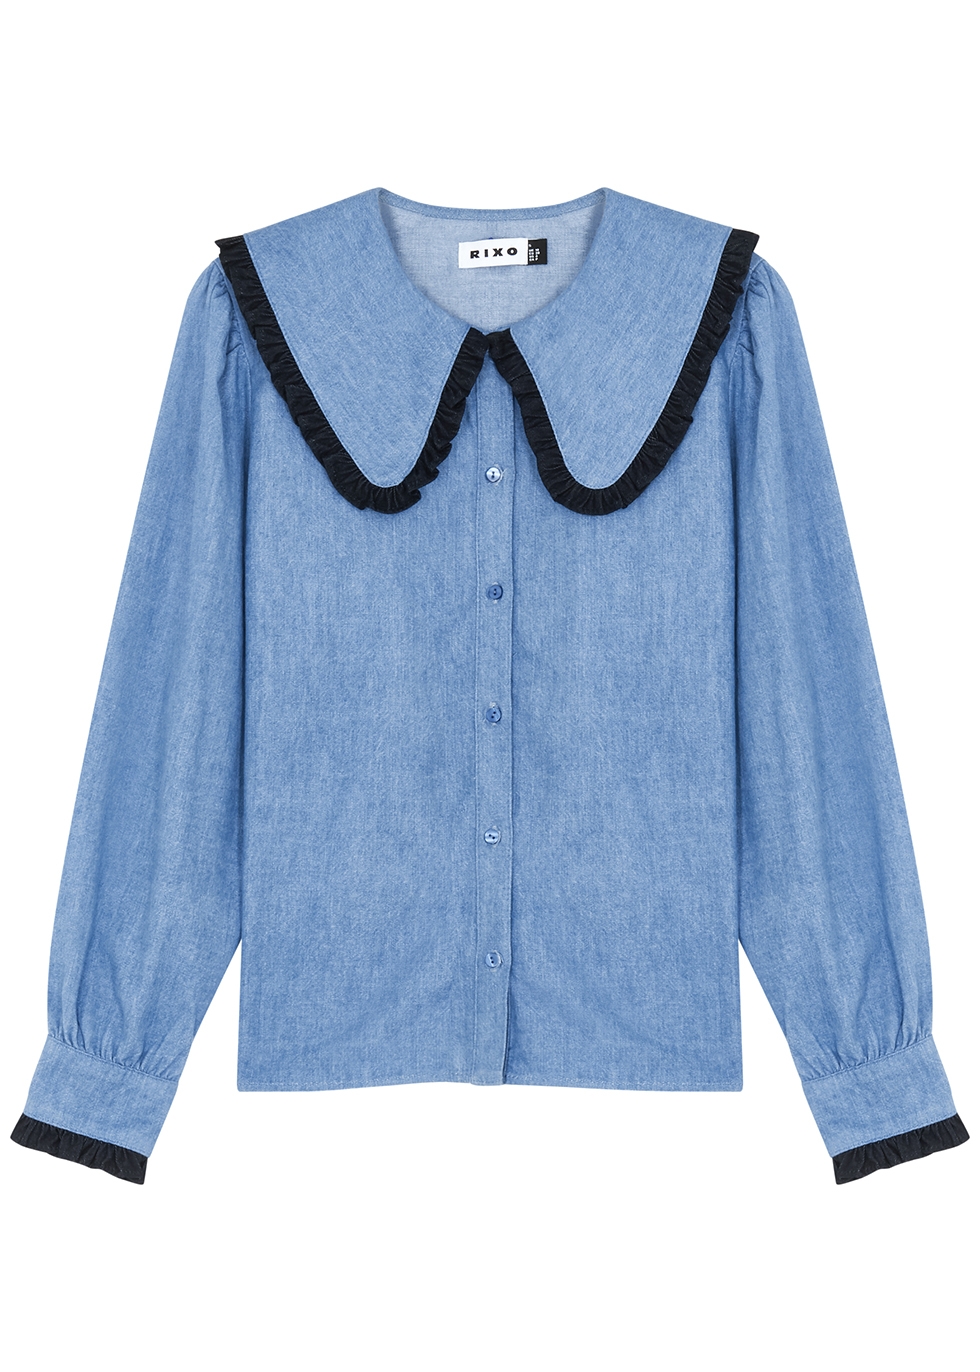 Misha blue chambray blouse